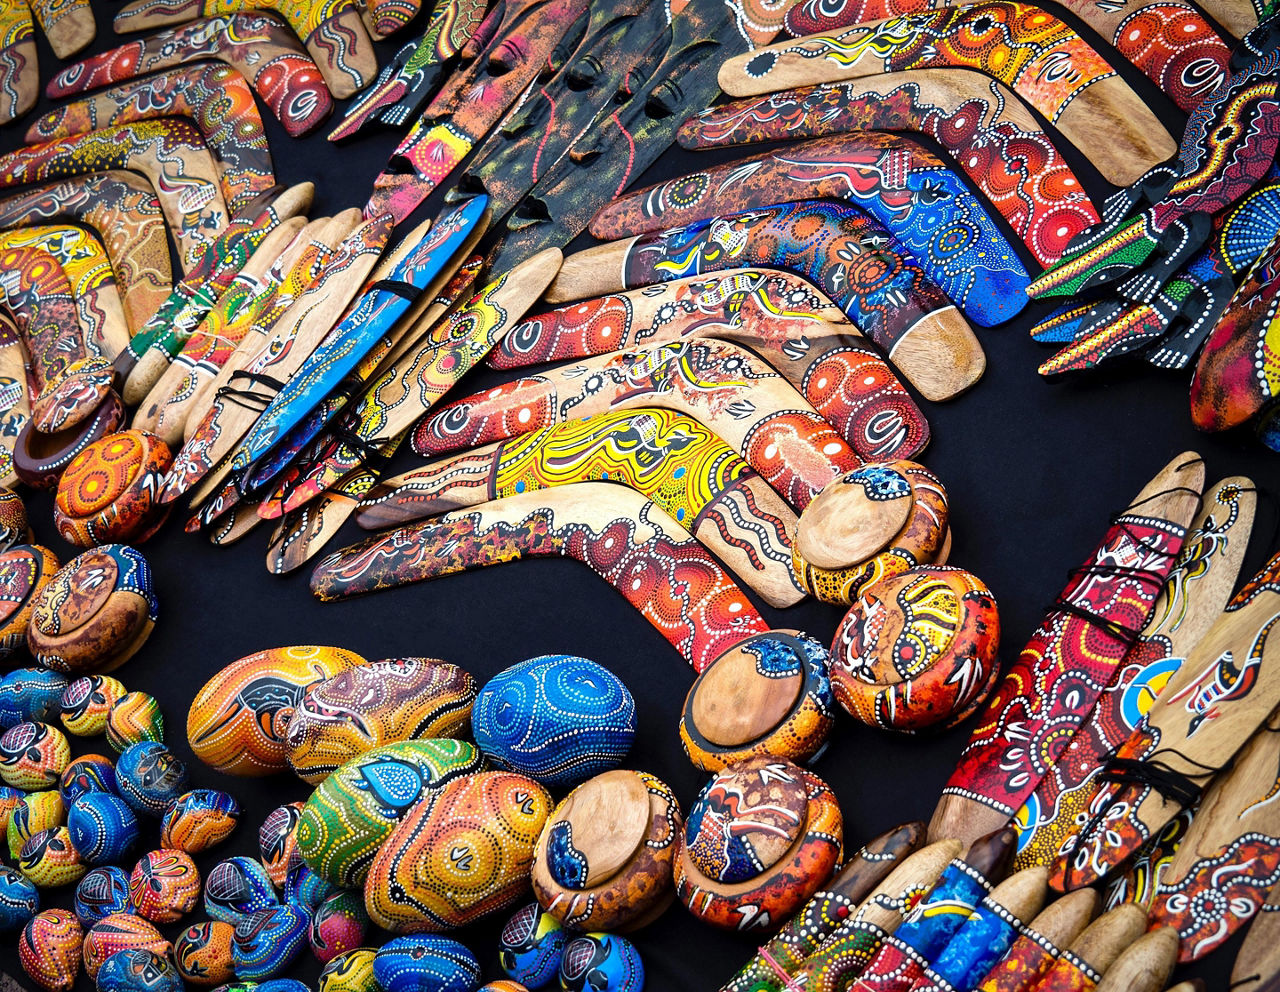 An assortment of different boomerang souvenirs in Australia